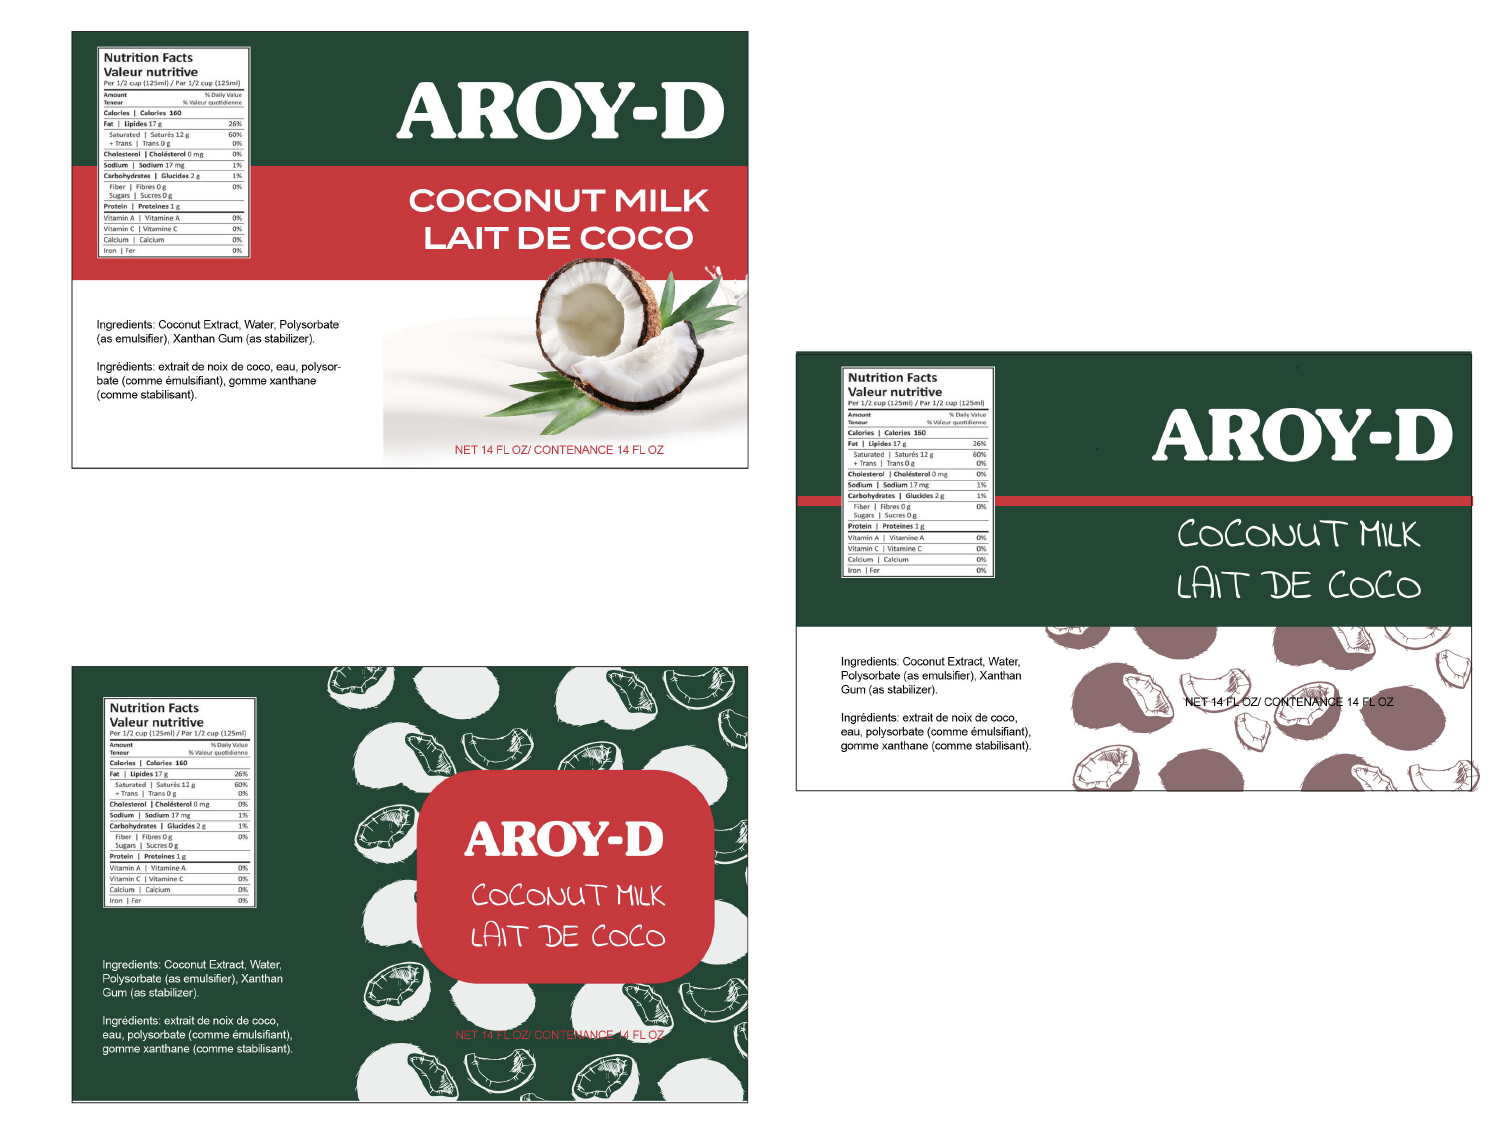 AROY-D Coconut Milk Re-Design